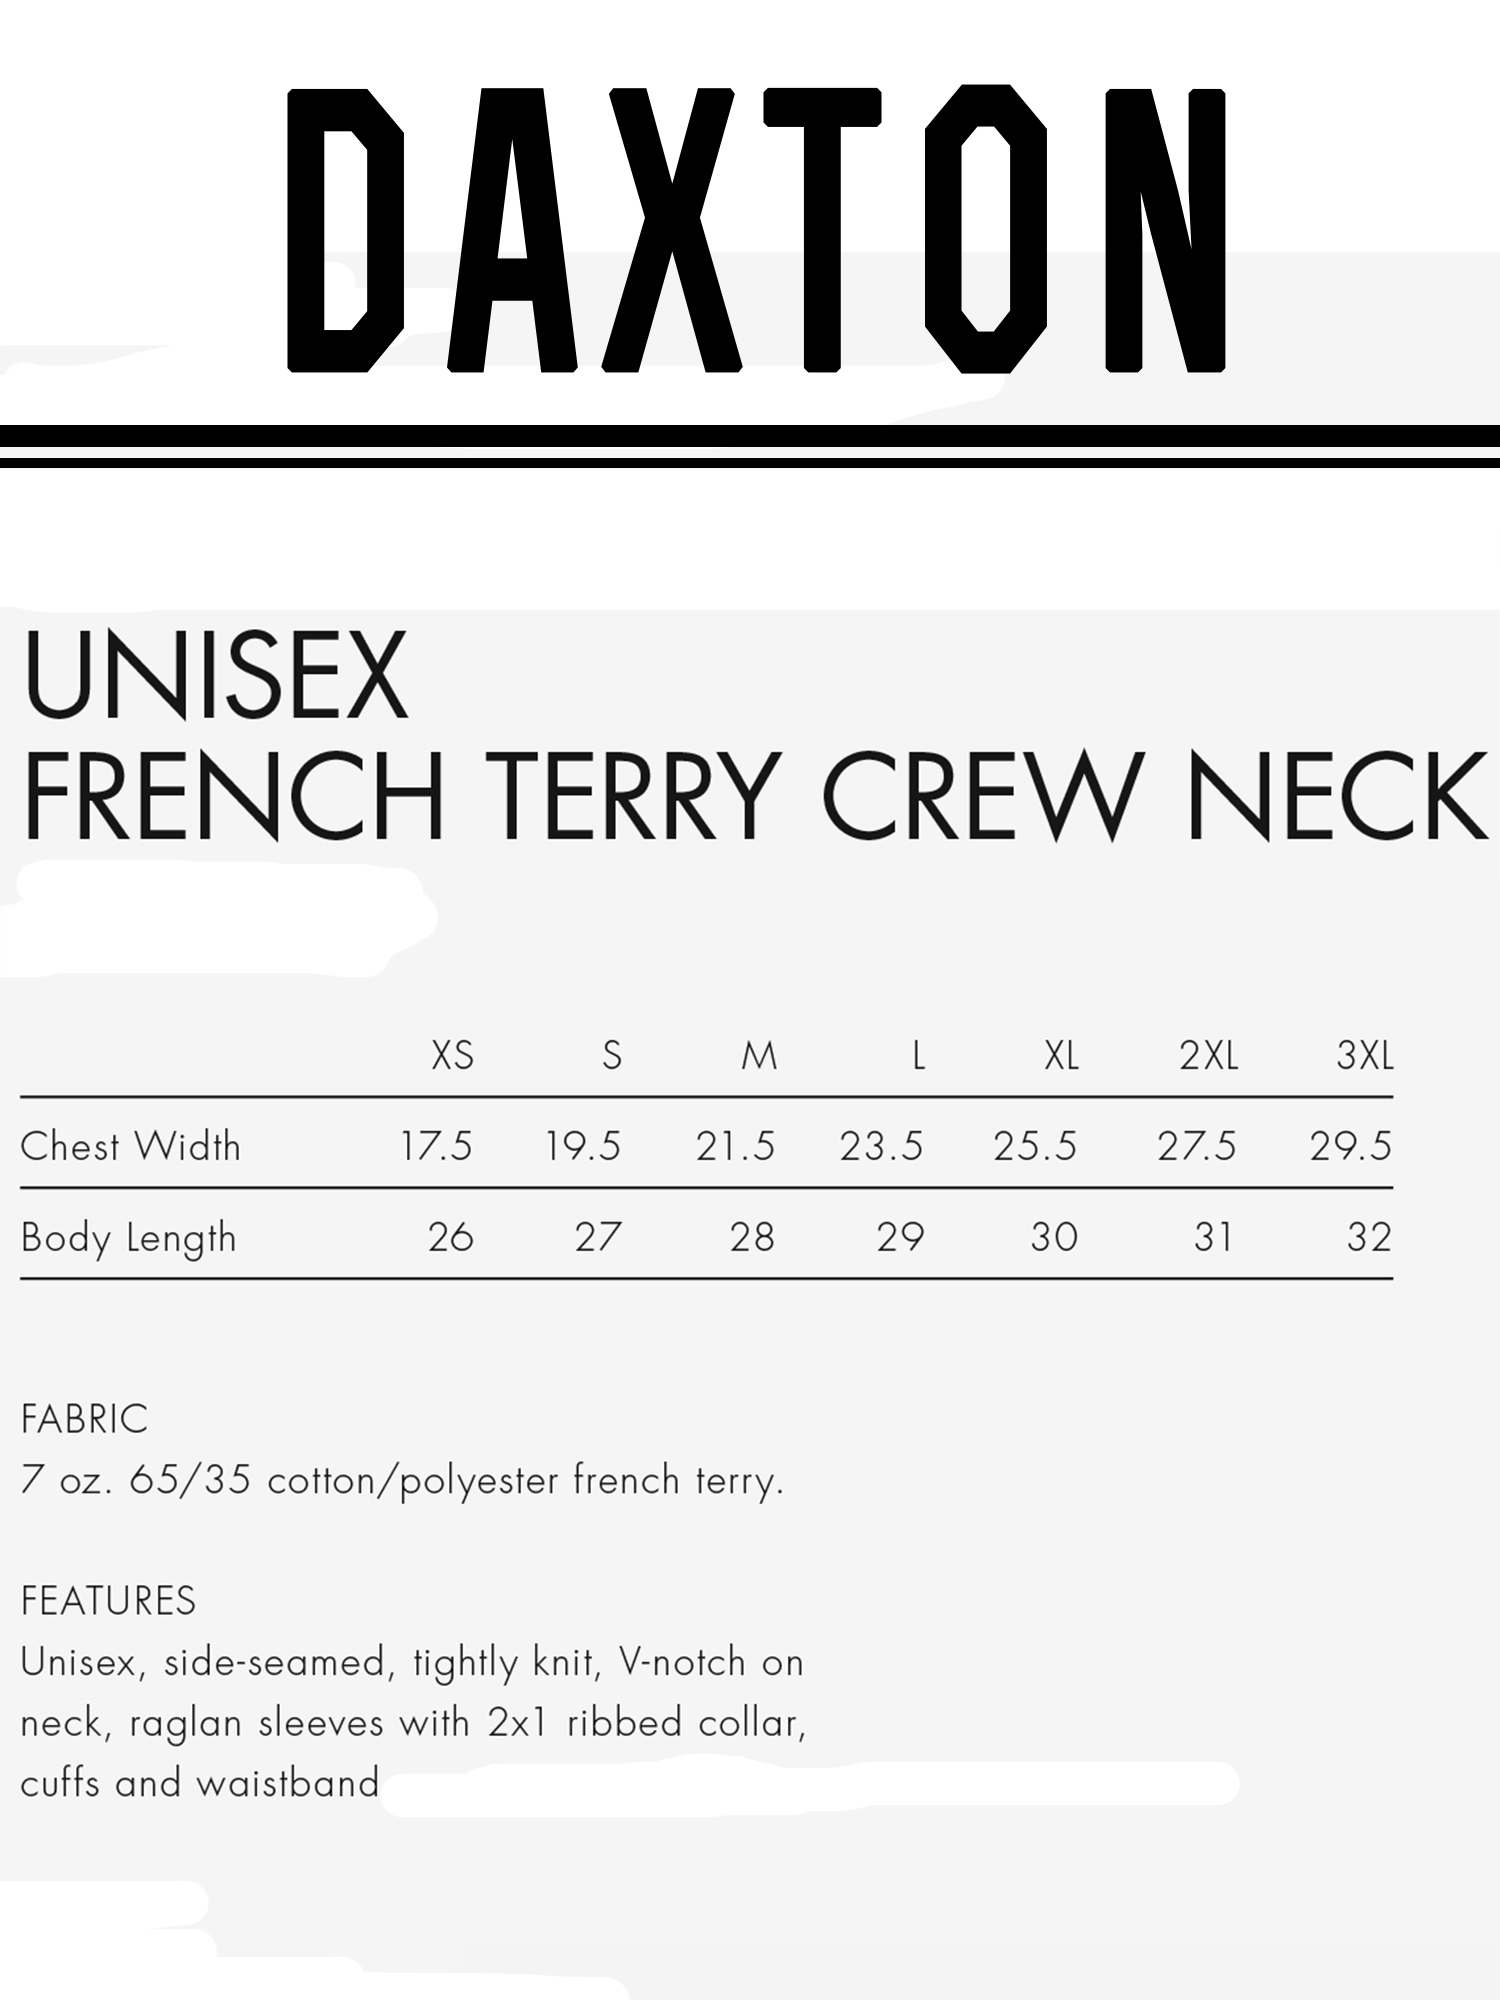 Daxton San Francisco Sweatshirt Athletic Pullover Crewneck French Terry Fabric, Peach Sweatshirt Black Letters, 2XL - image 2 of 3